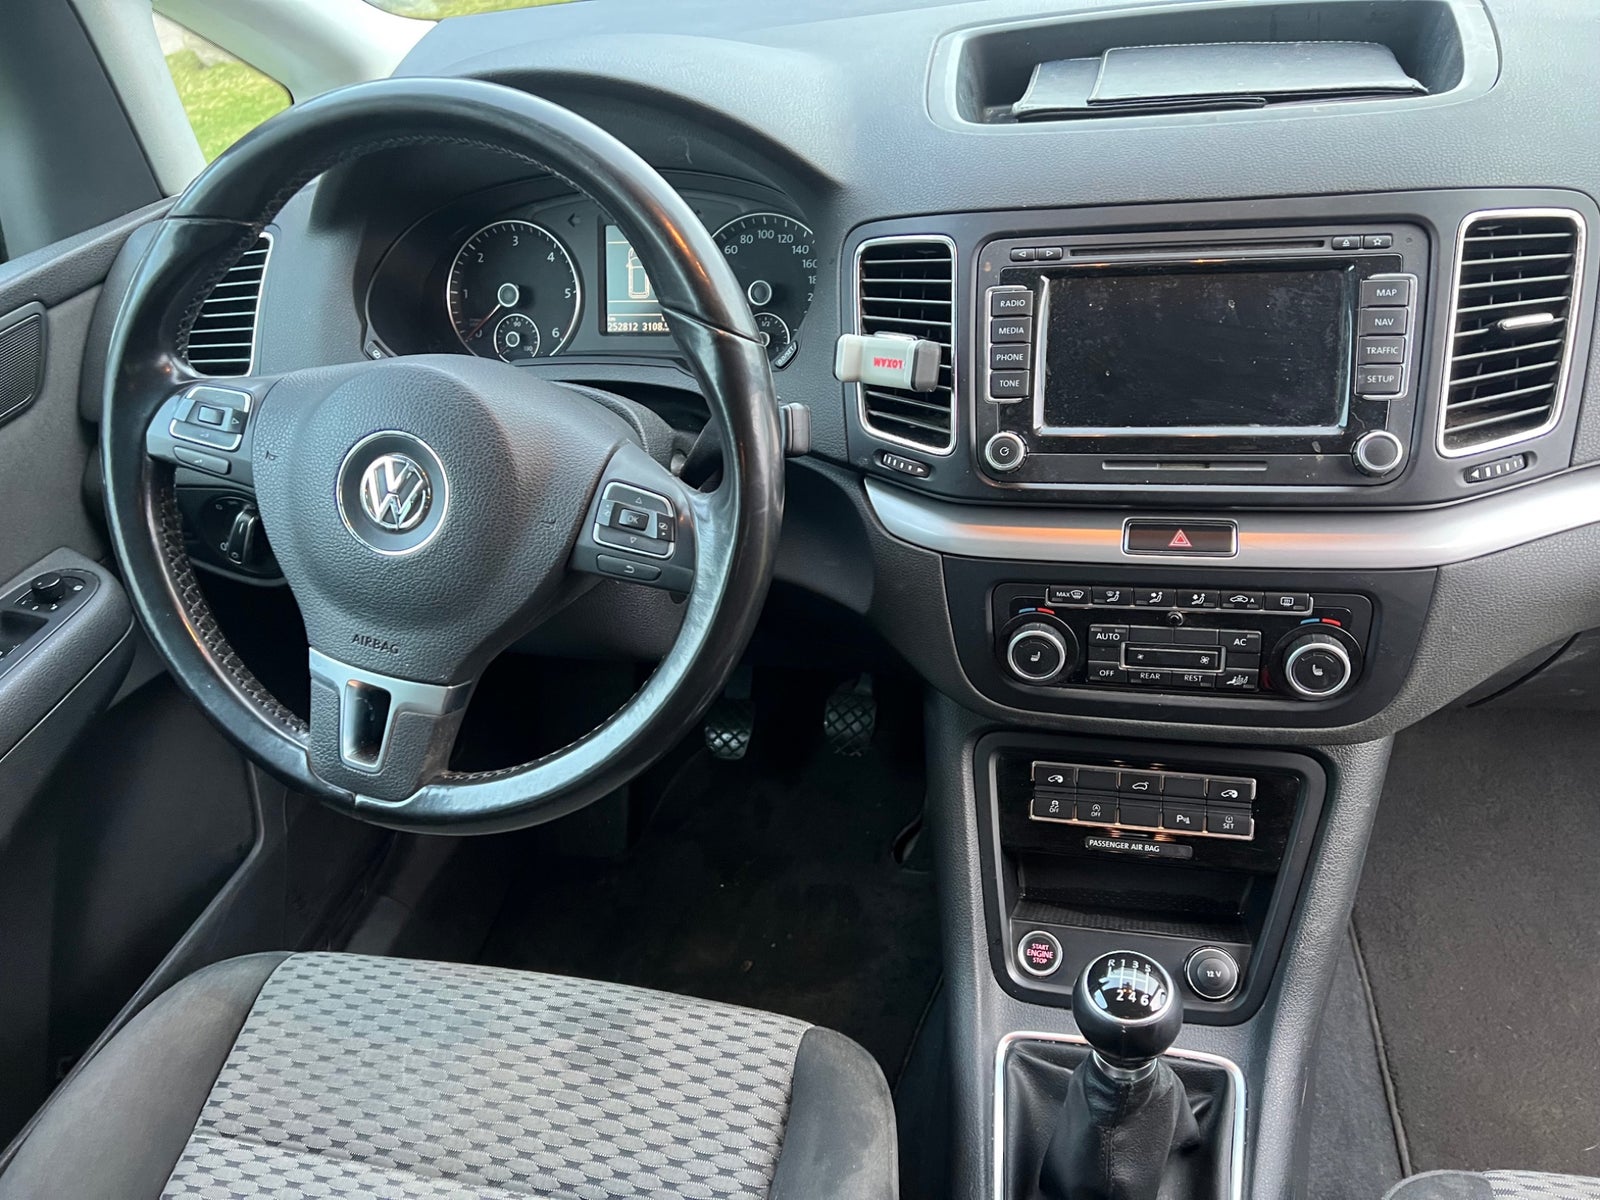 VW Sharan 2,0 TDi 140 Comfortline BMT 7prs Diesel modelår